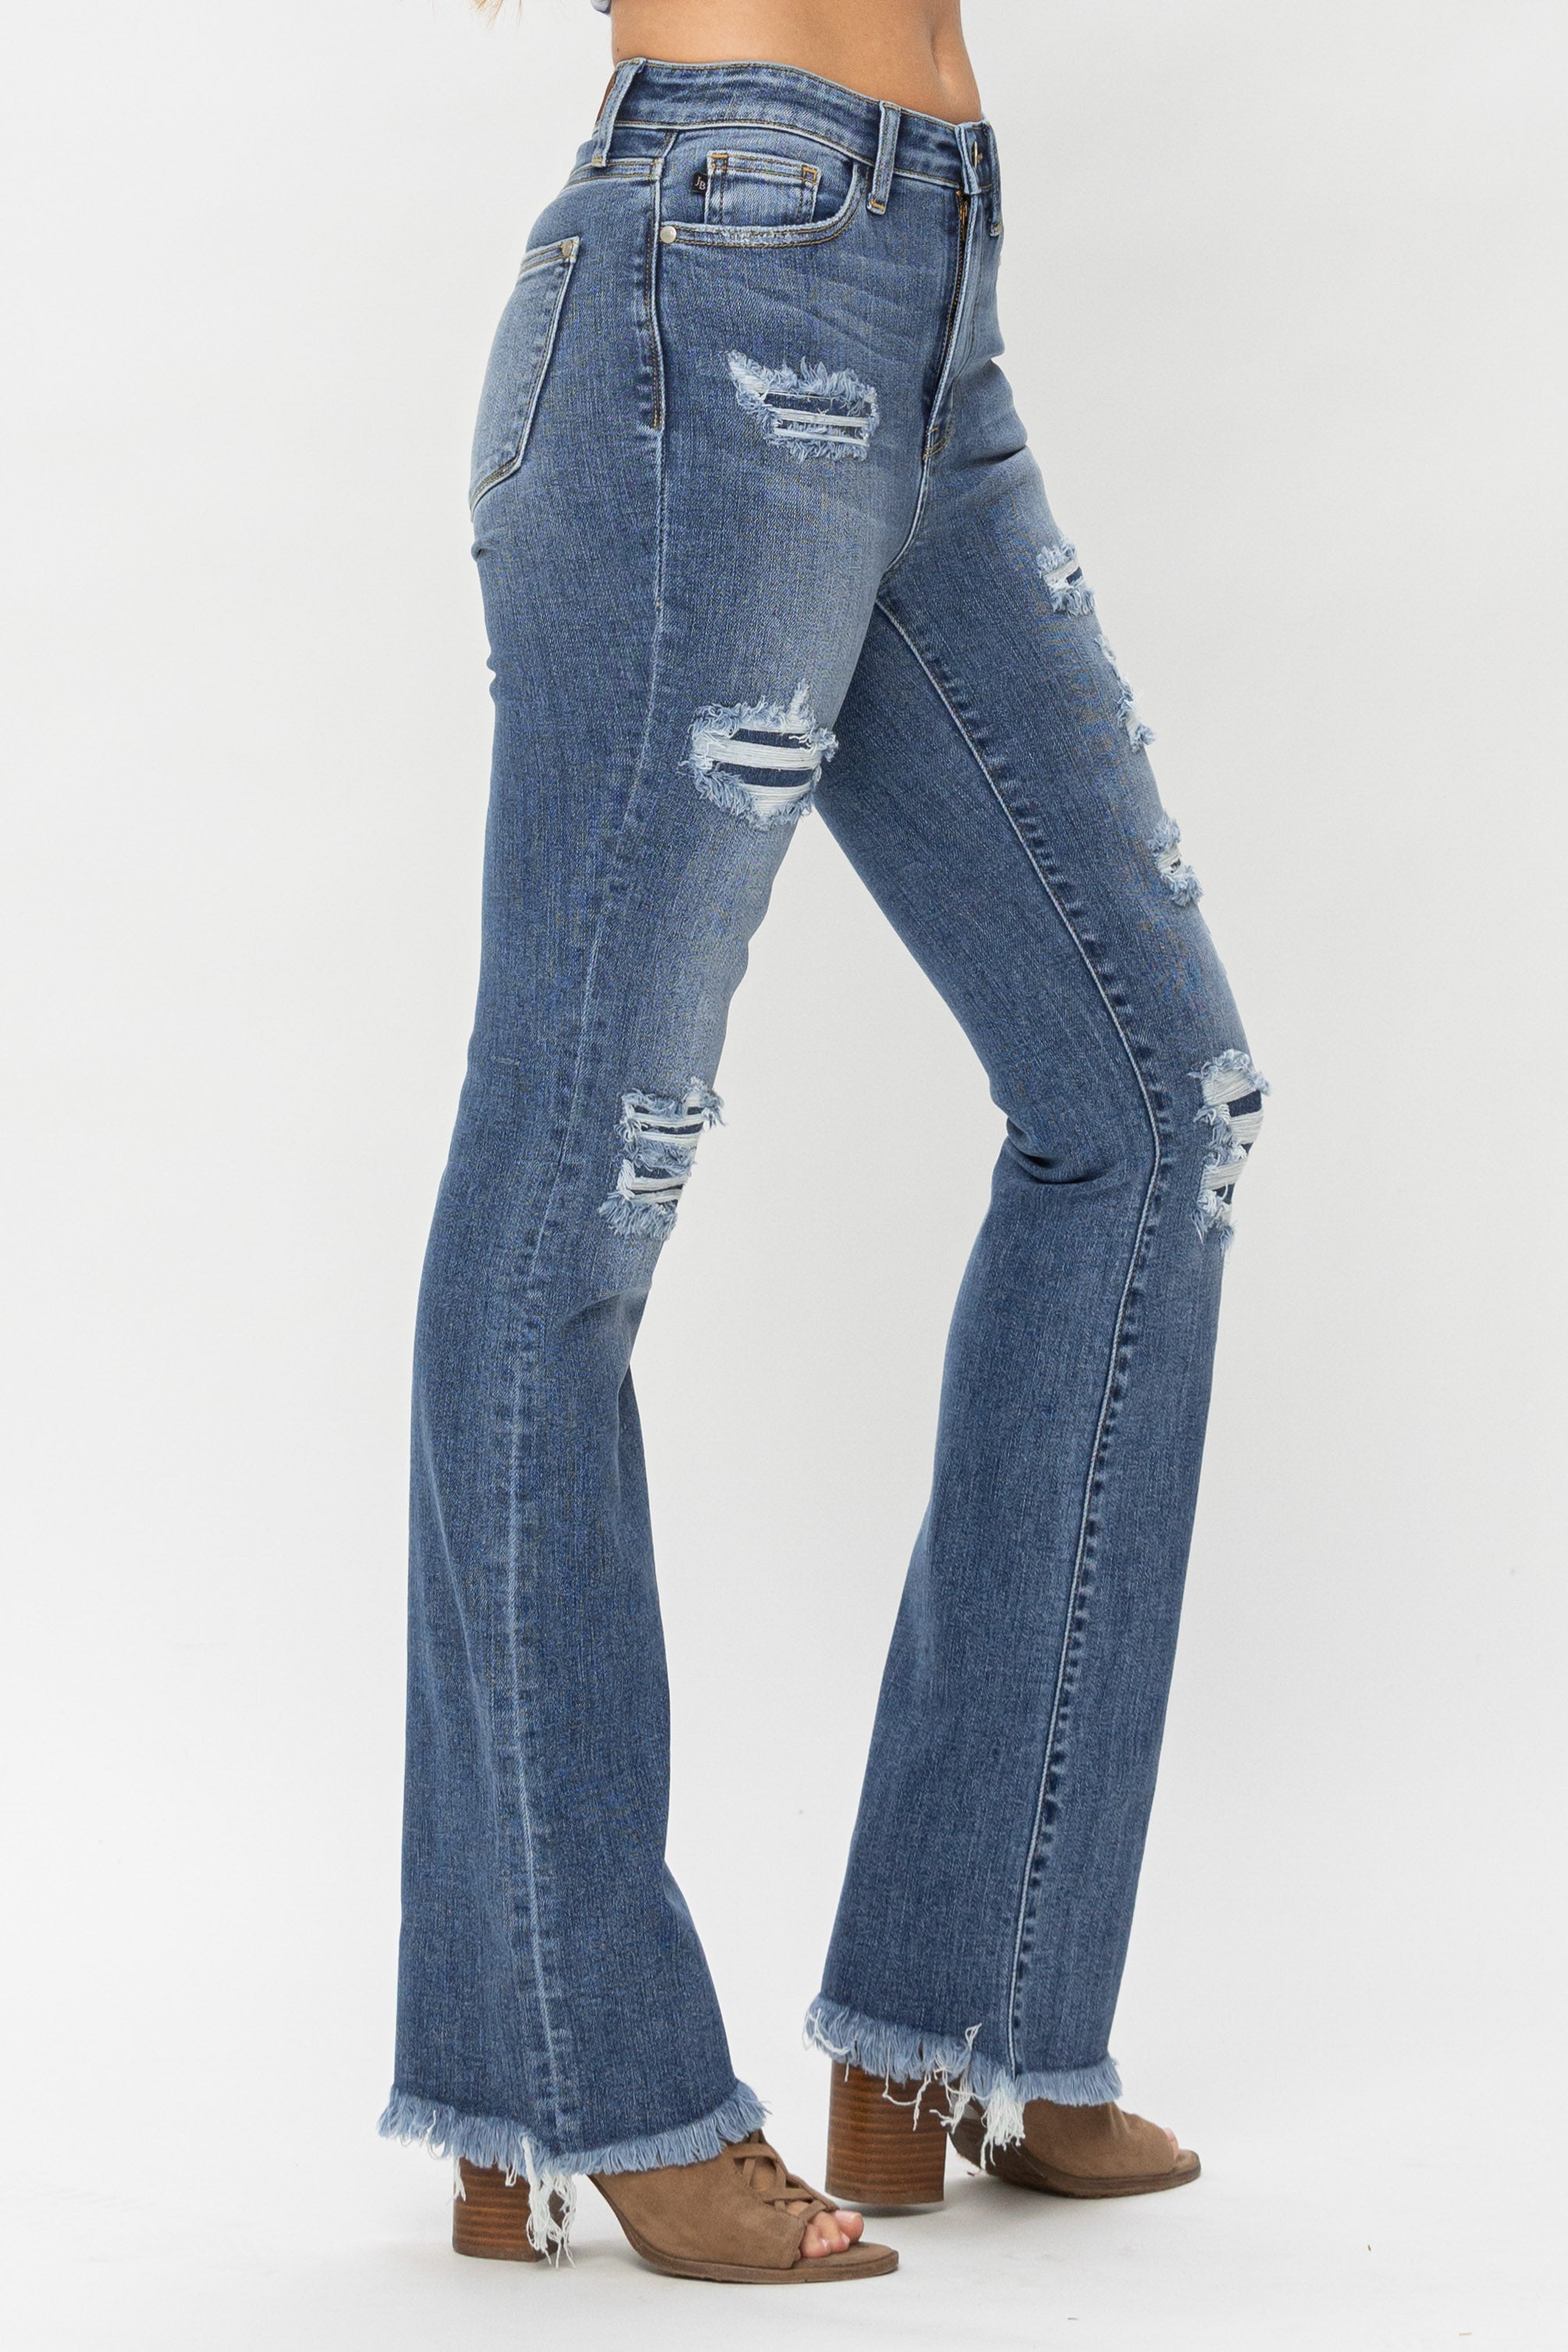 Judy Blue High Waist Patched Bootcut Jeans-Denim-Watermelon Apparel